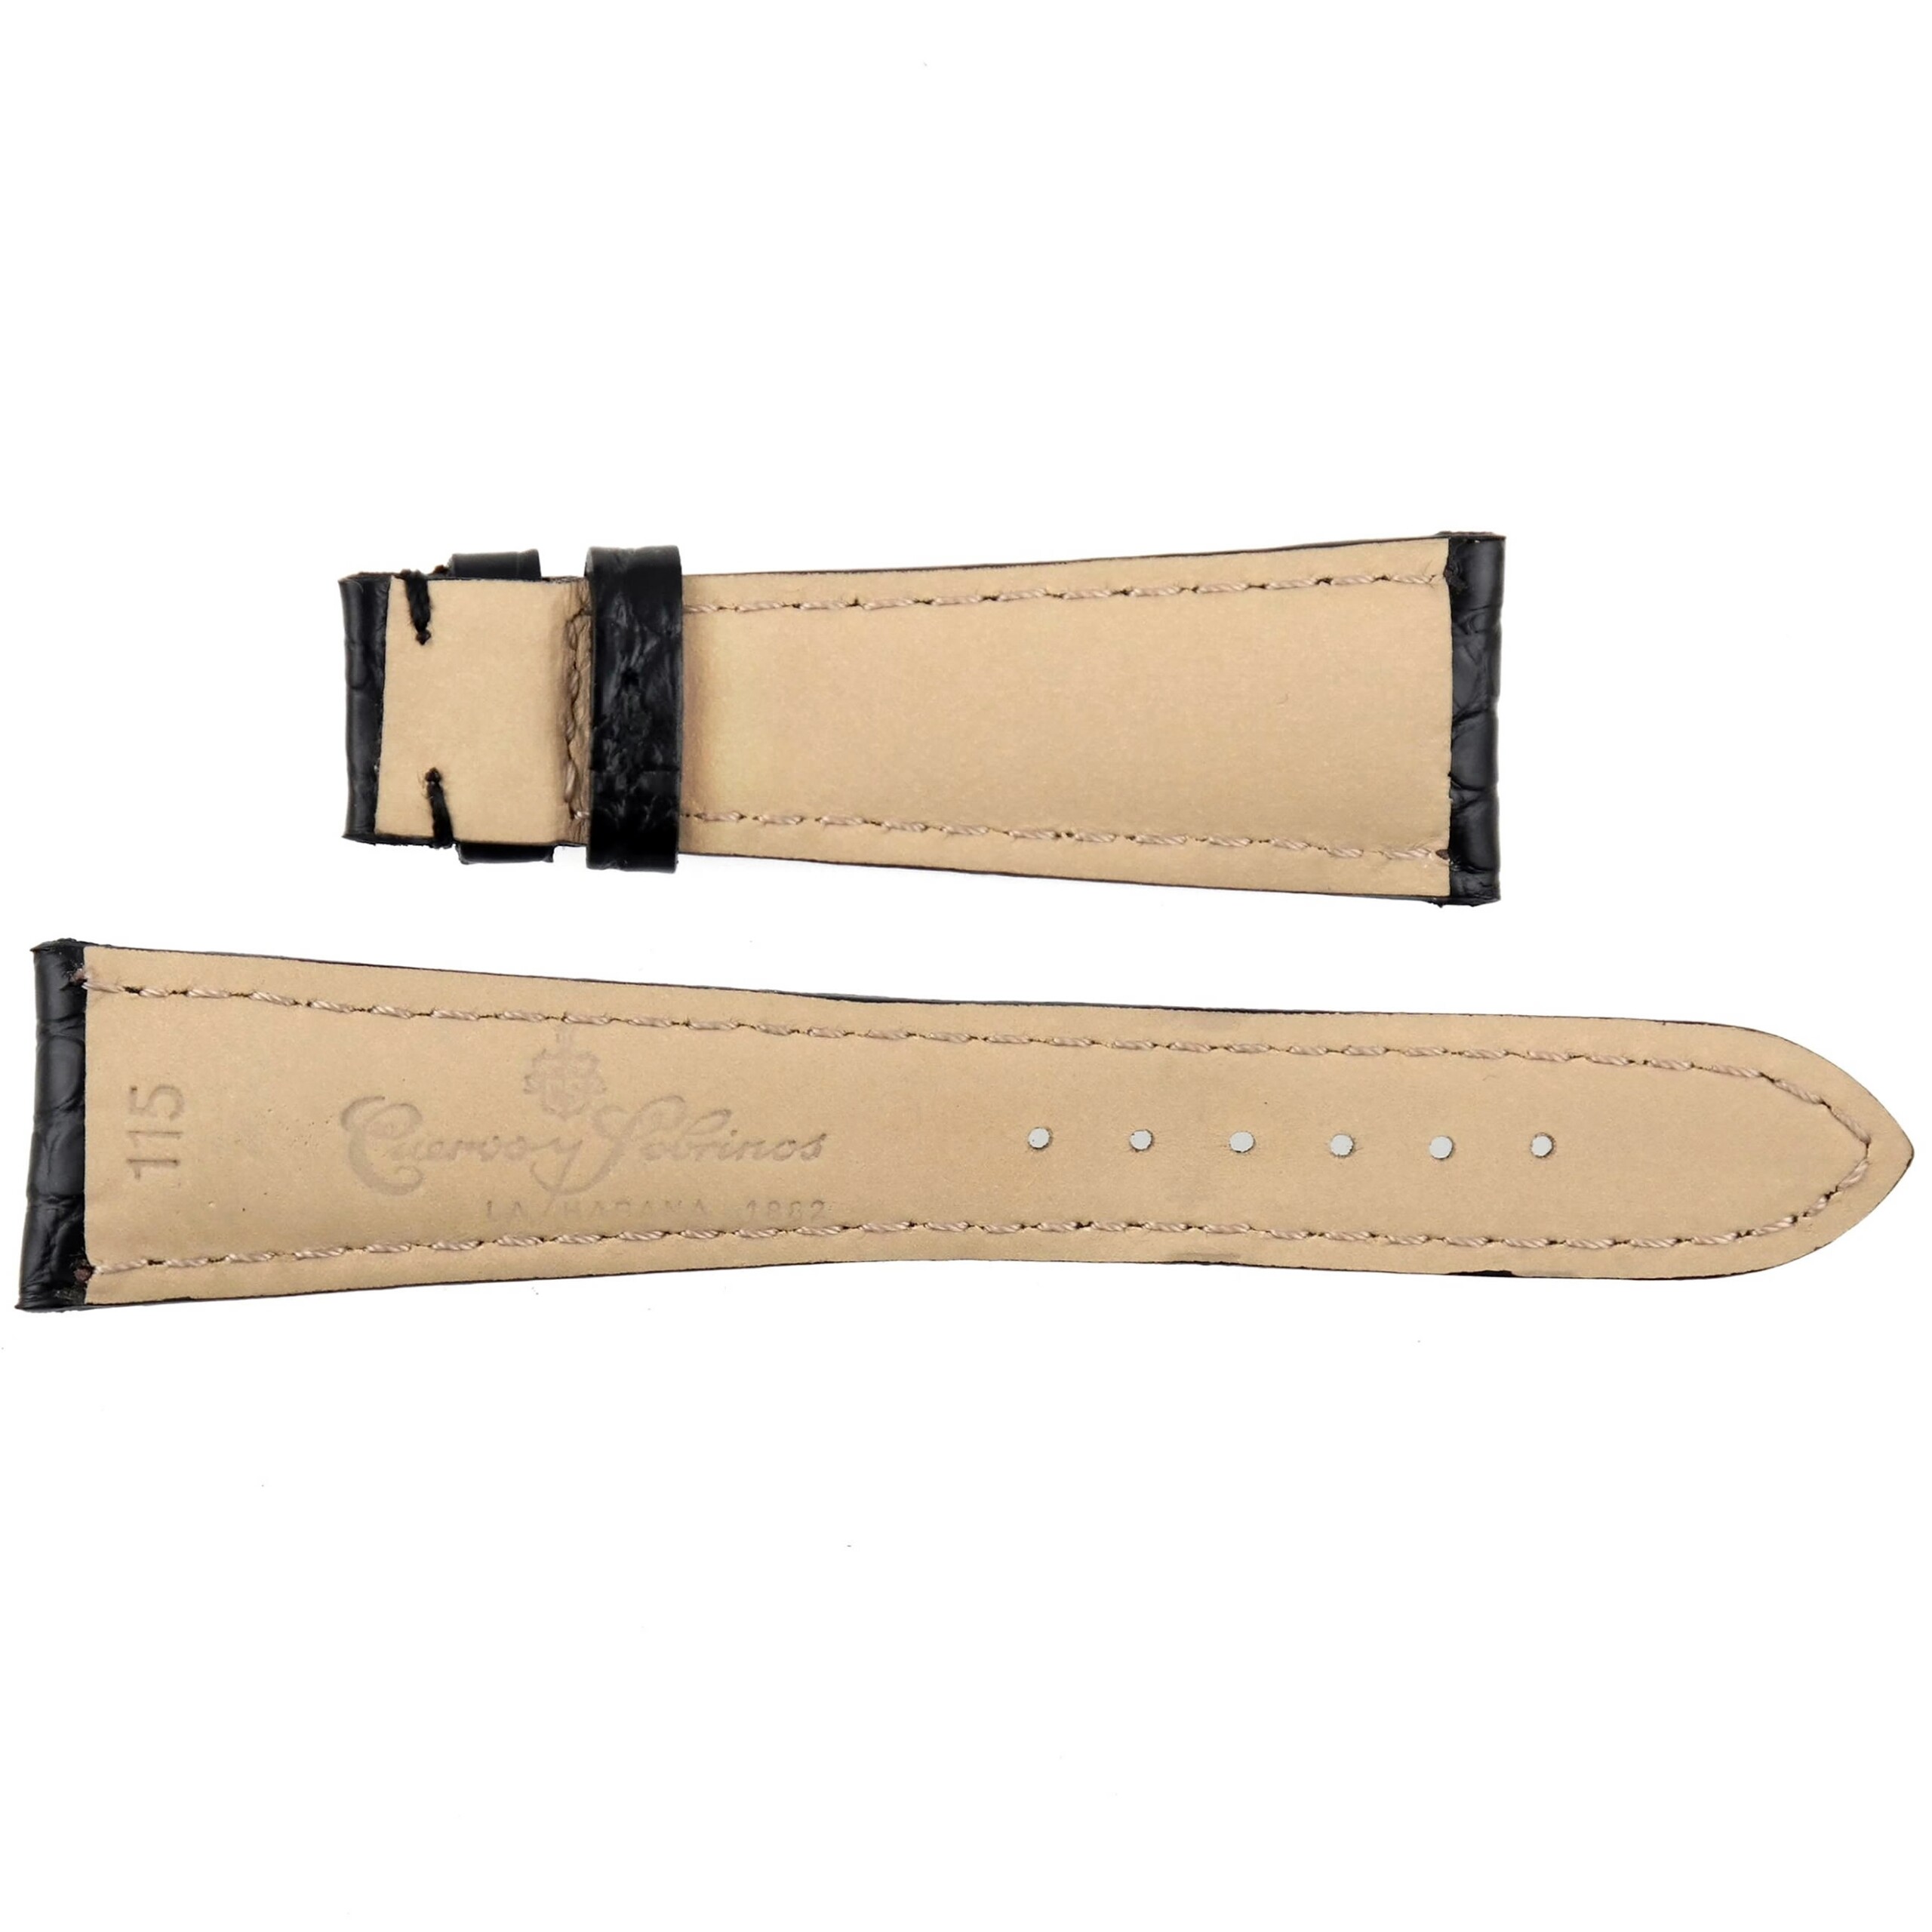 CUERVO Y SOBRINOS - Luxury Watch Strap - 22/16 - 115/70 - Genuine Leather